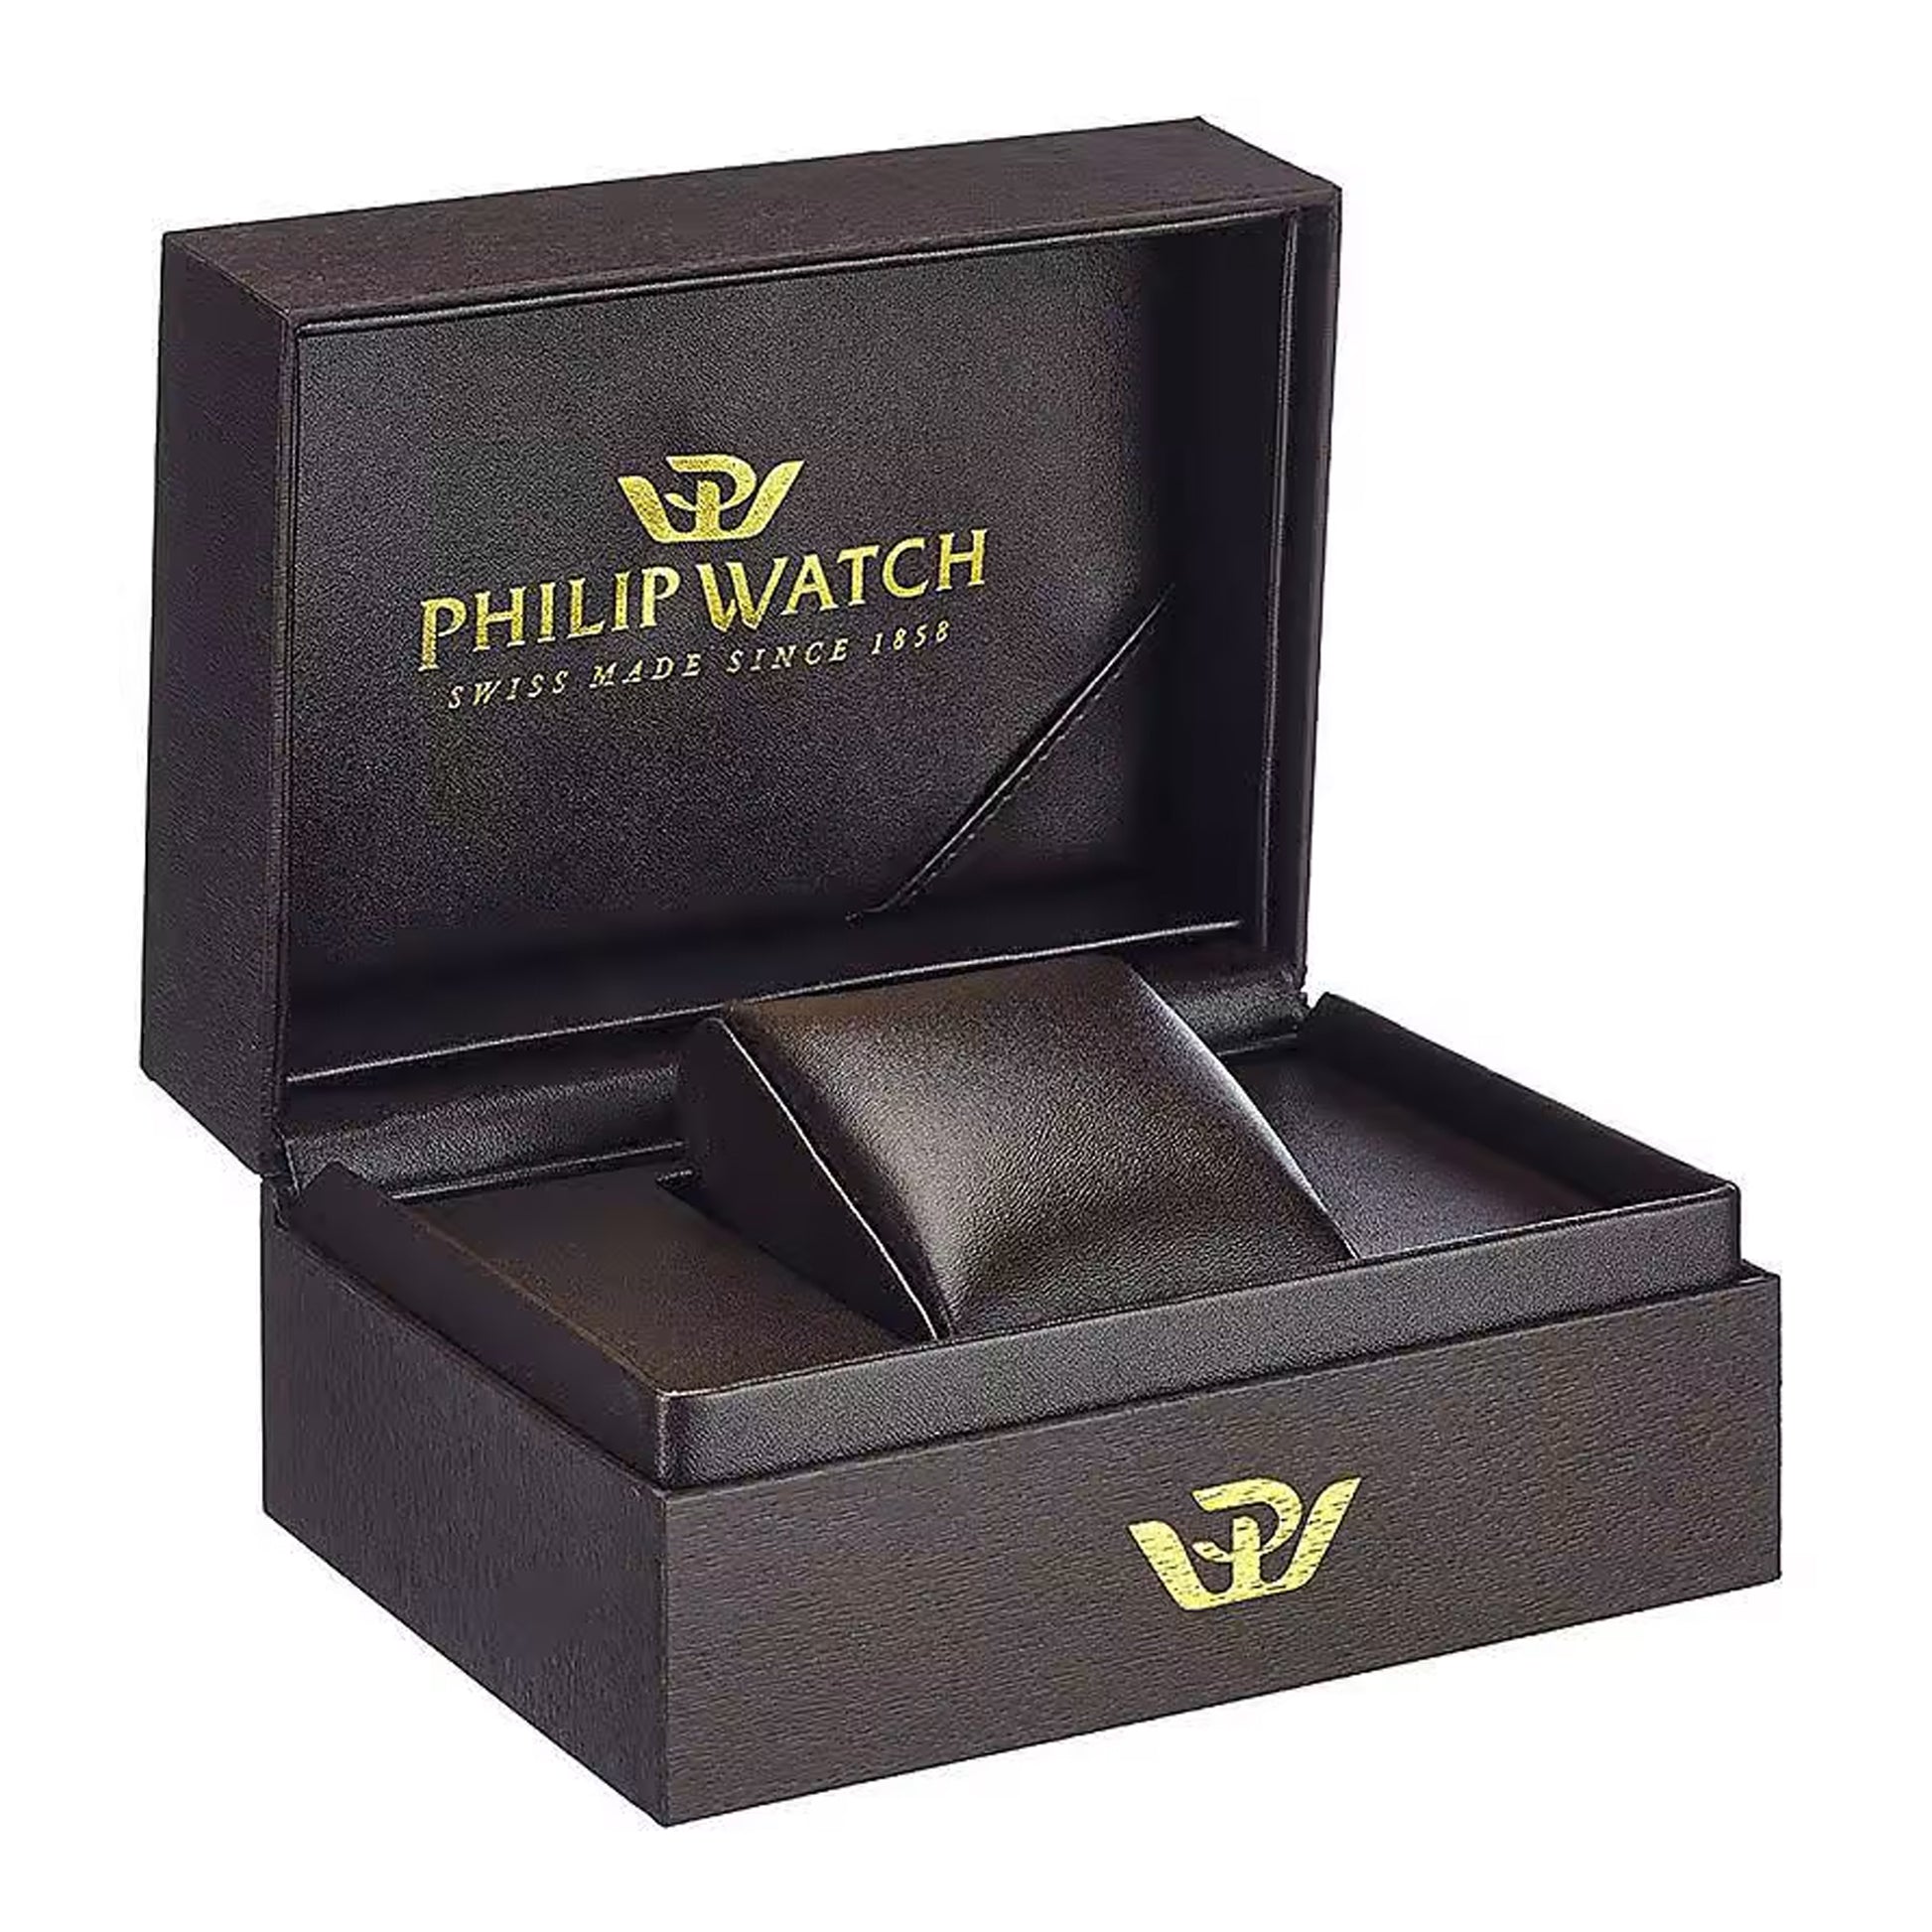 Philip Watch orologio Caribe